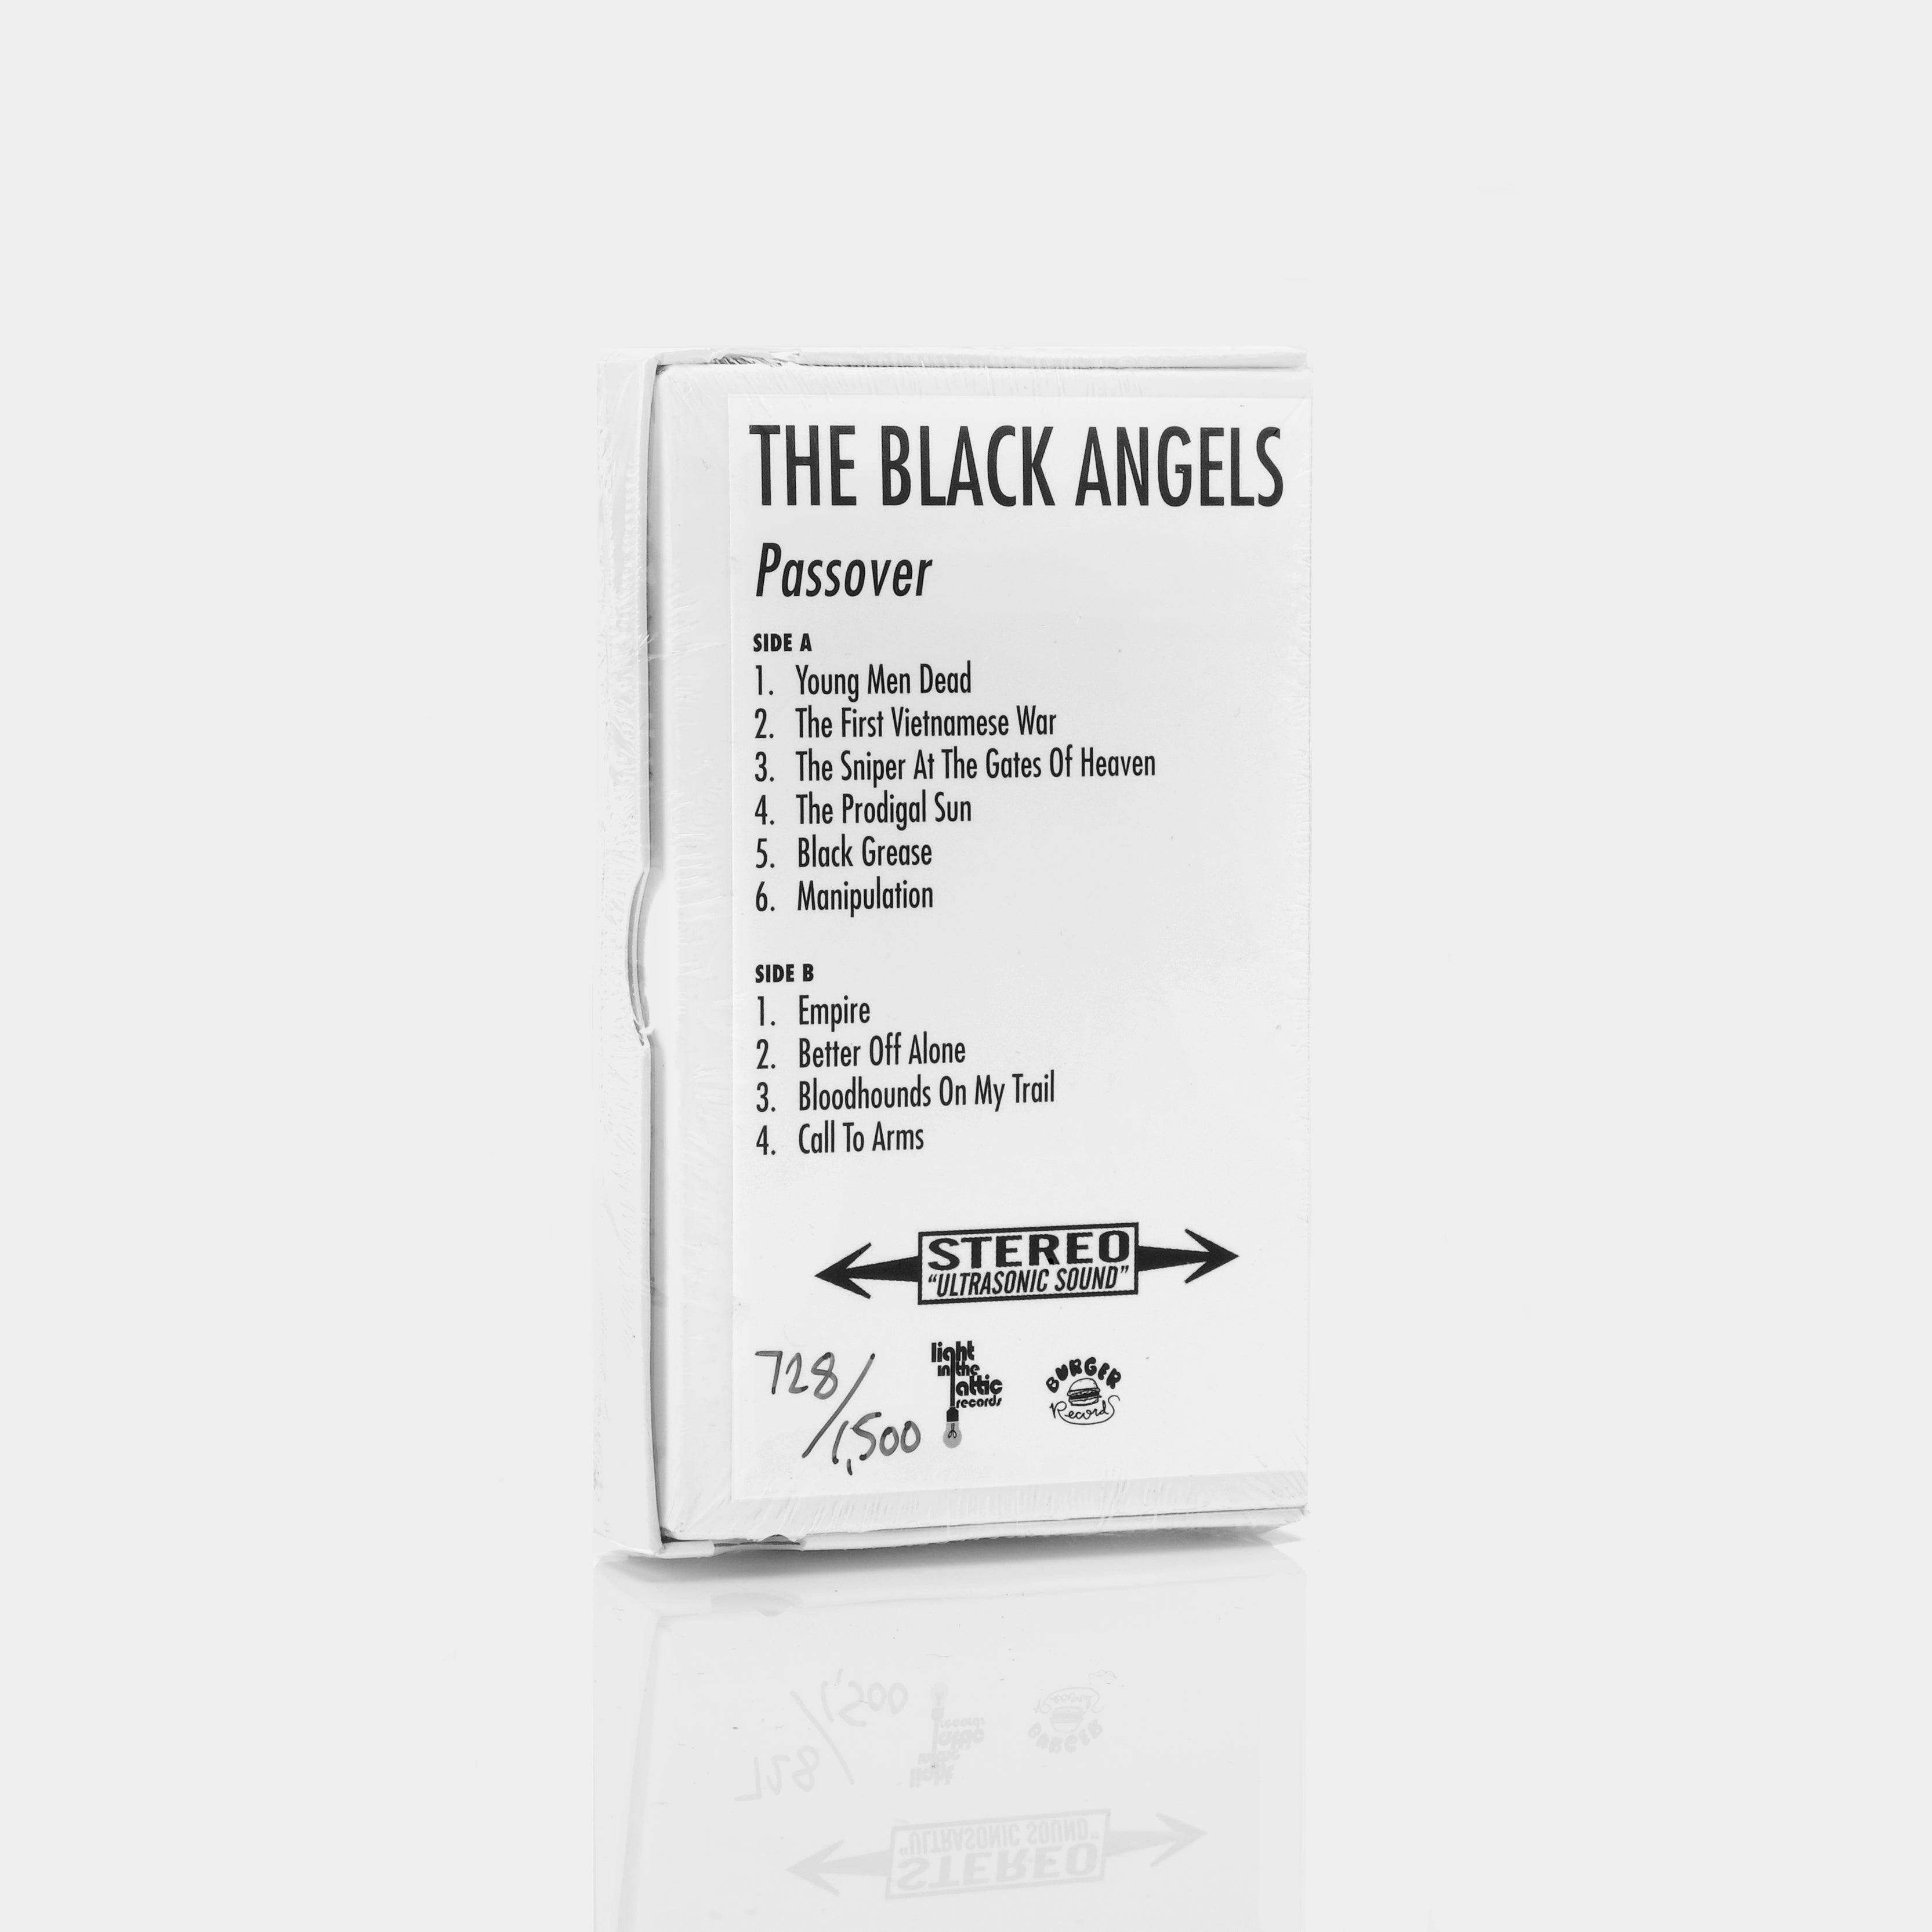 The Black Angels - Passover Cassette Tape